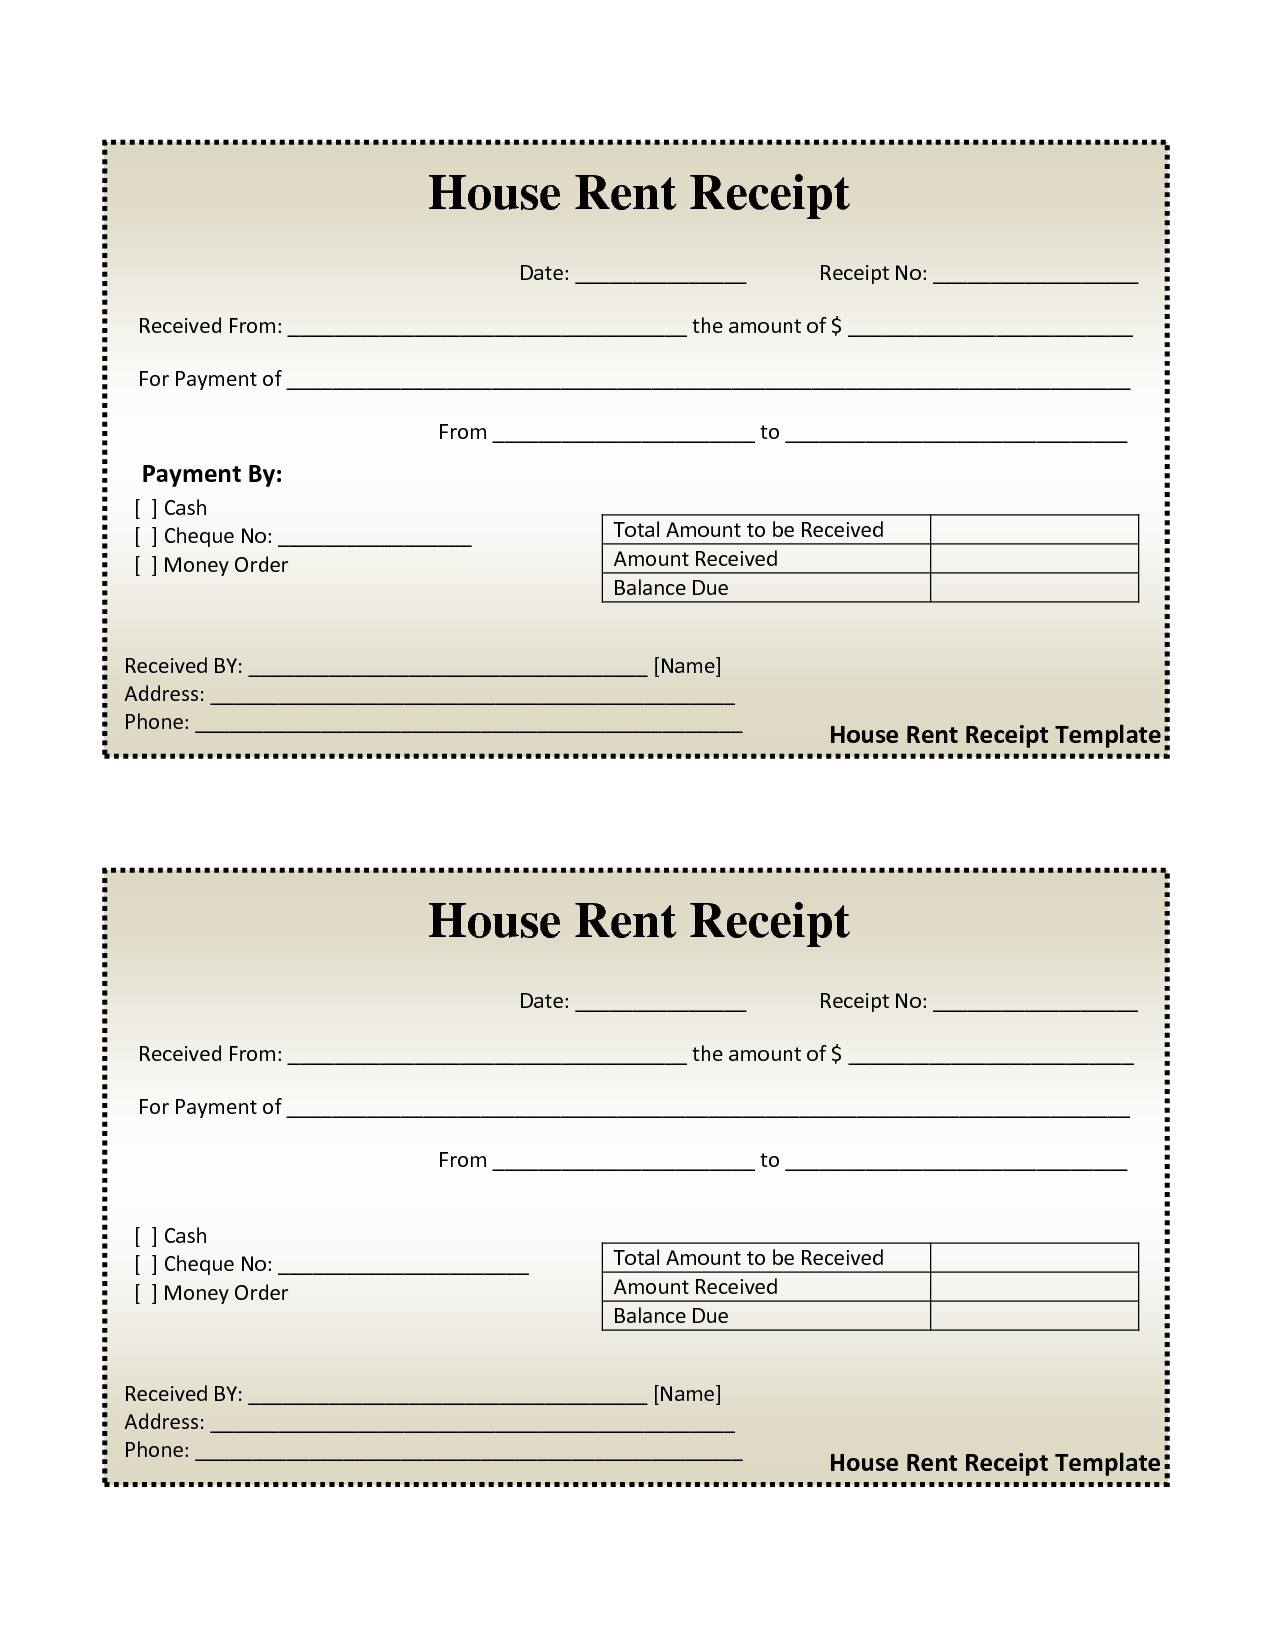 Free House Rental Invoice | House Rent Receipt Template - Doc - Free Printable Rent Receipt